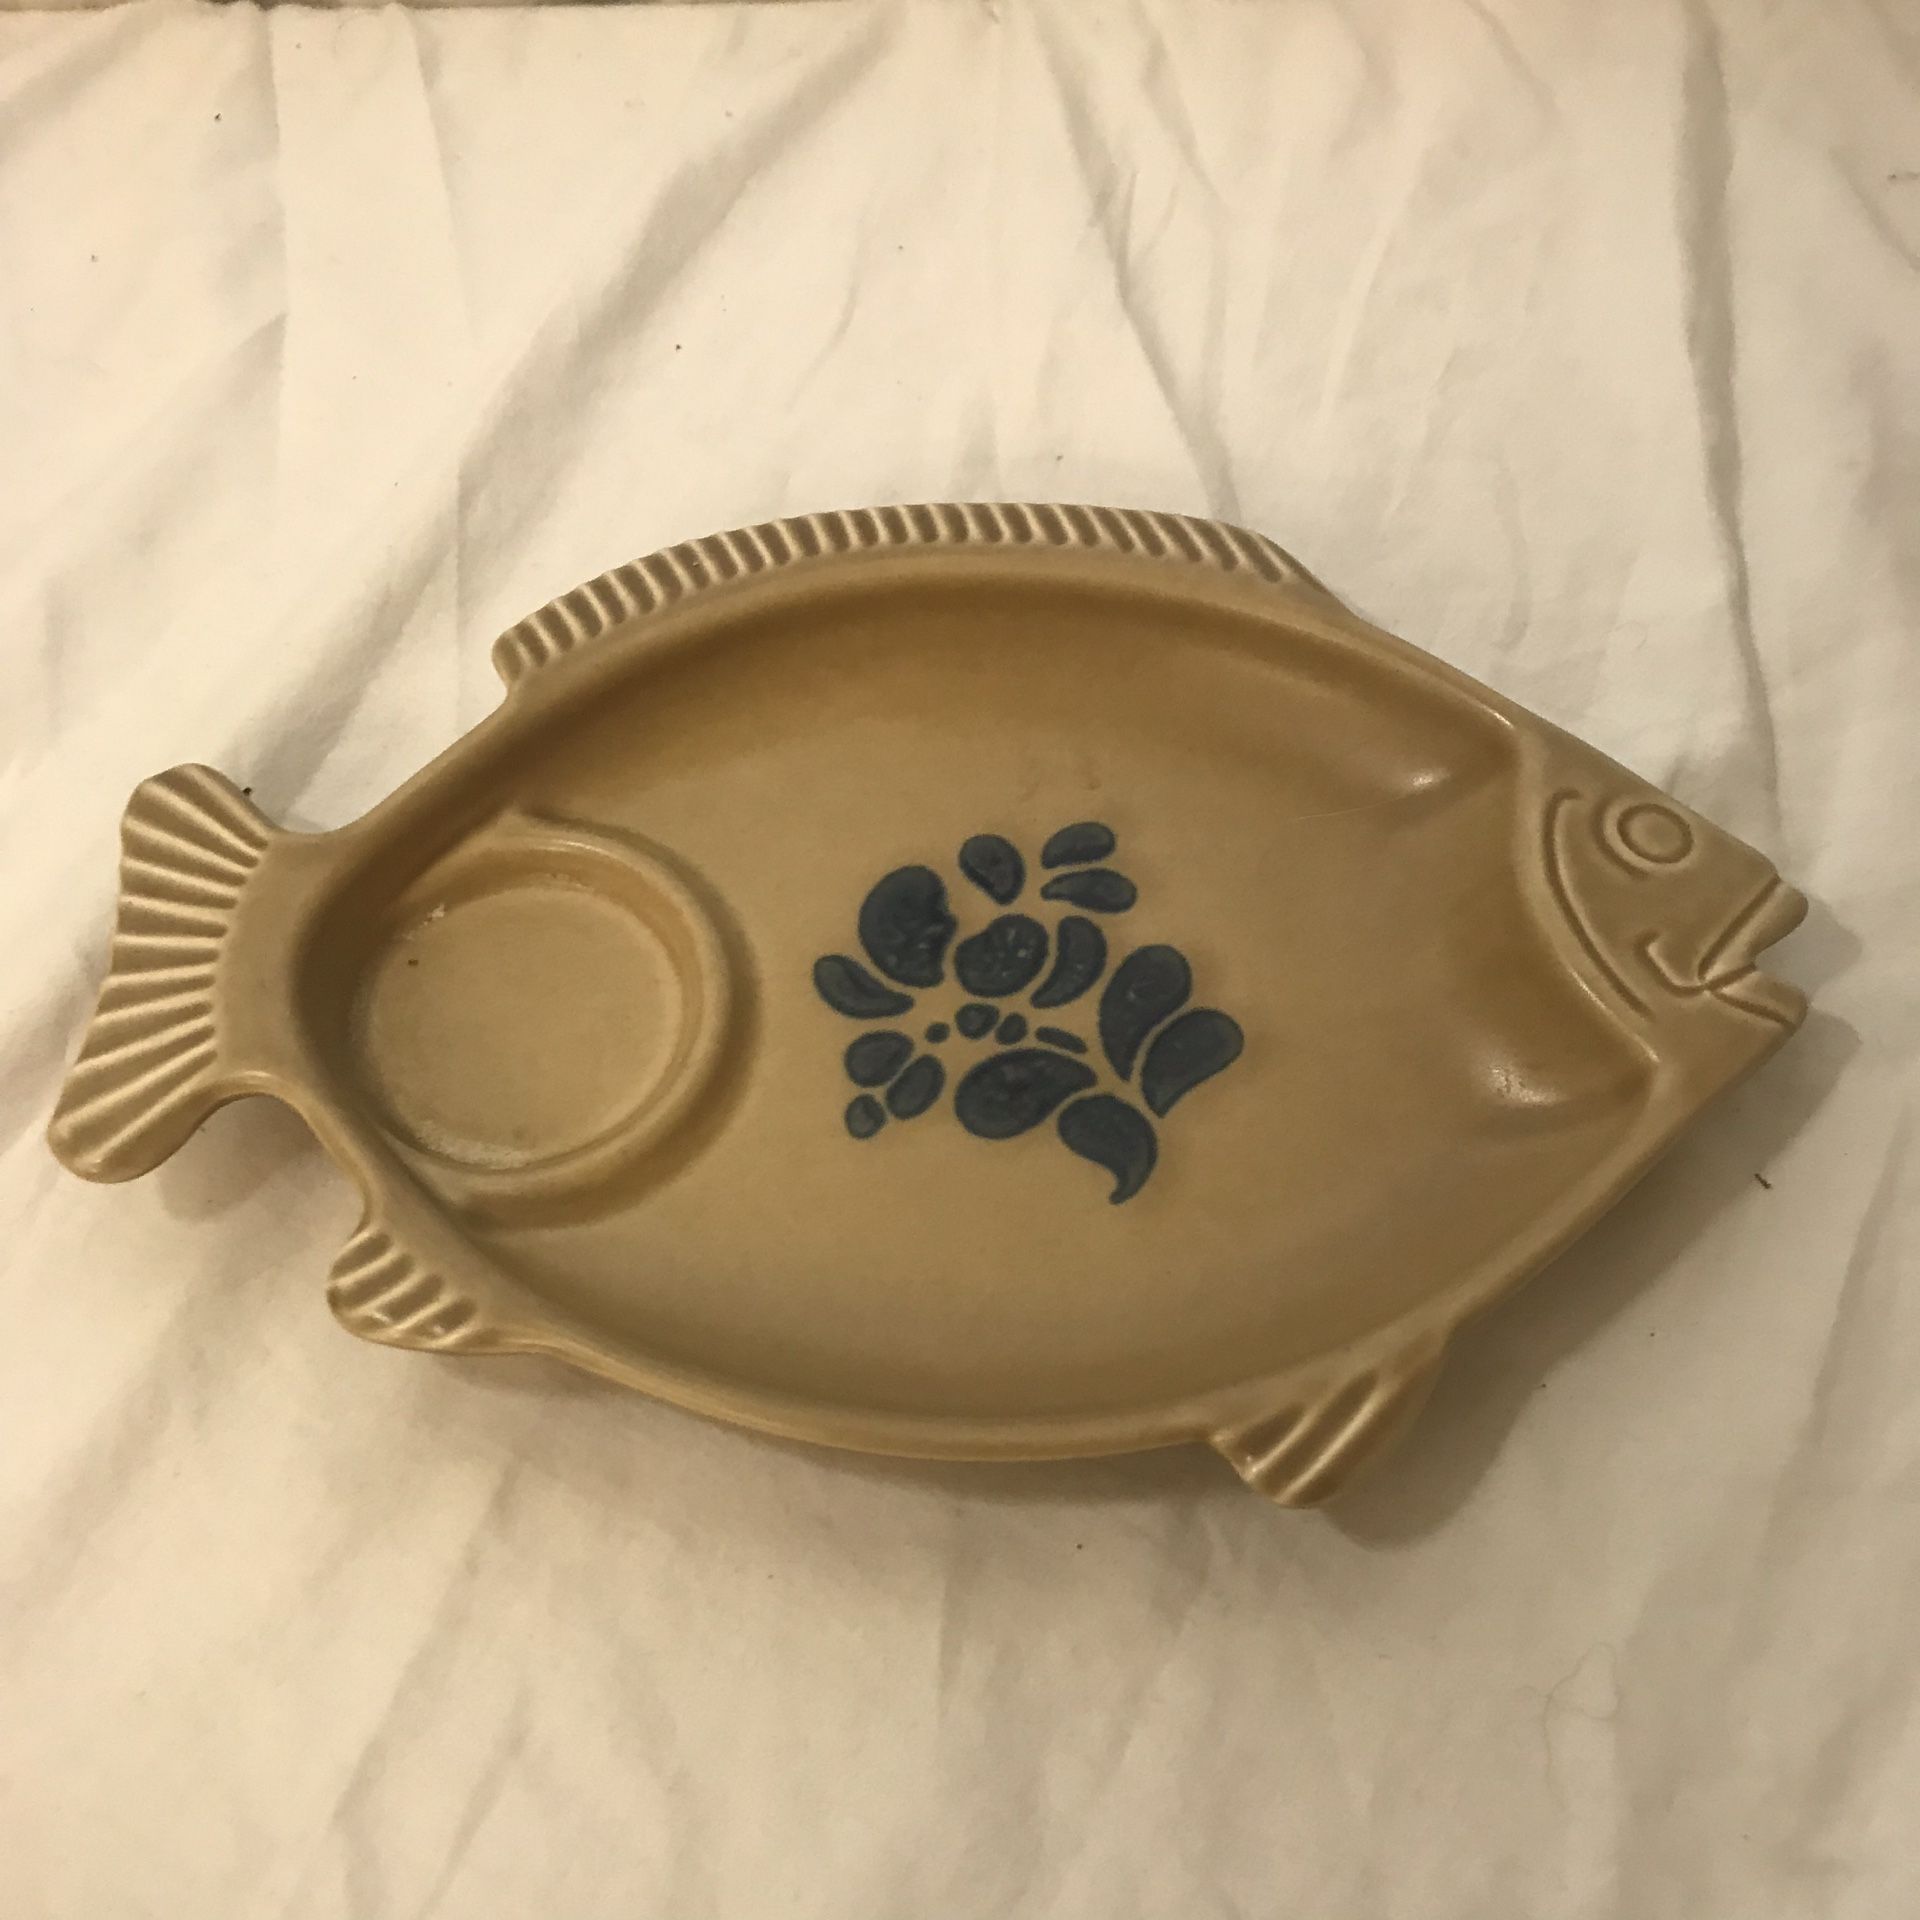 Vintage Folk Art Pfaltzgraff Seafood Server Fish Shaped Dish USA Stoneware Pottery